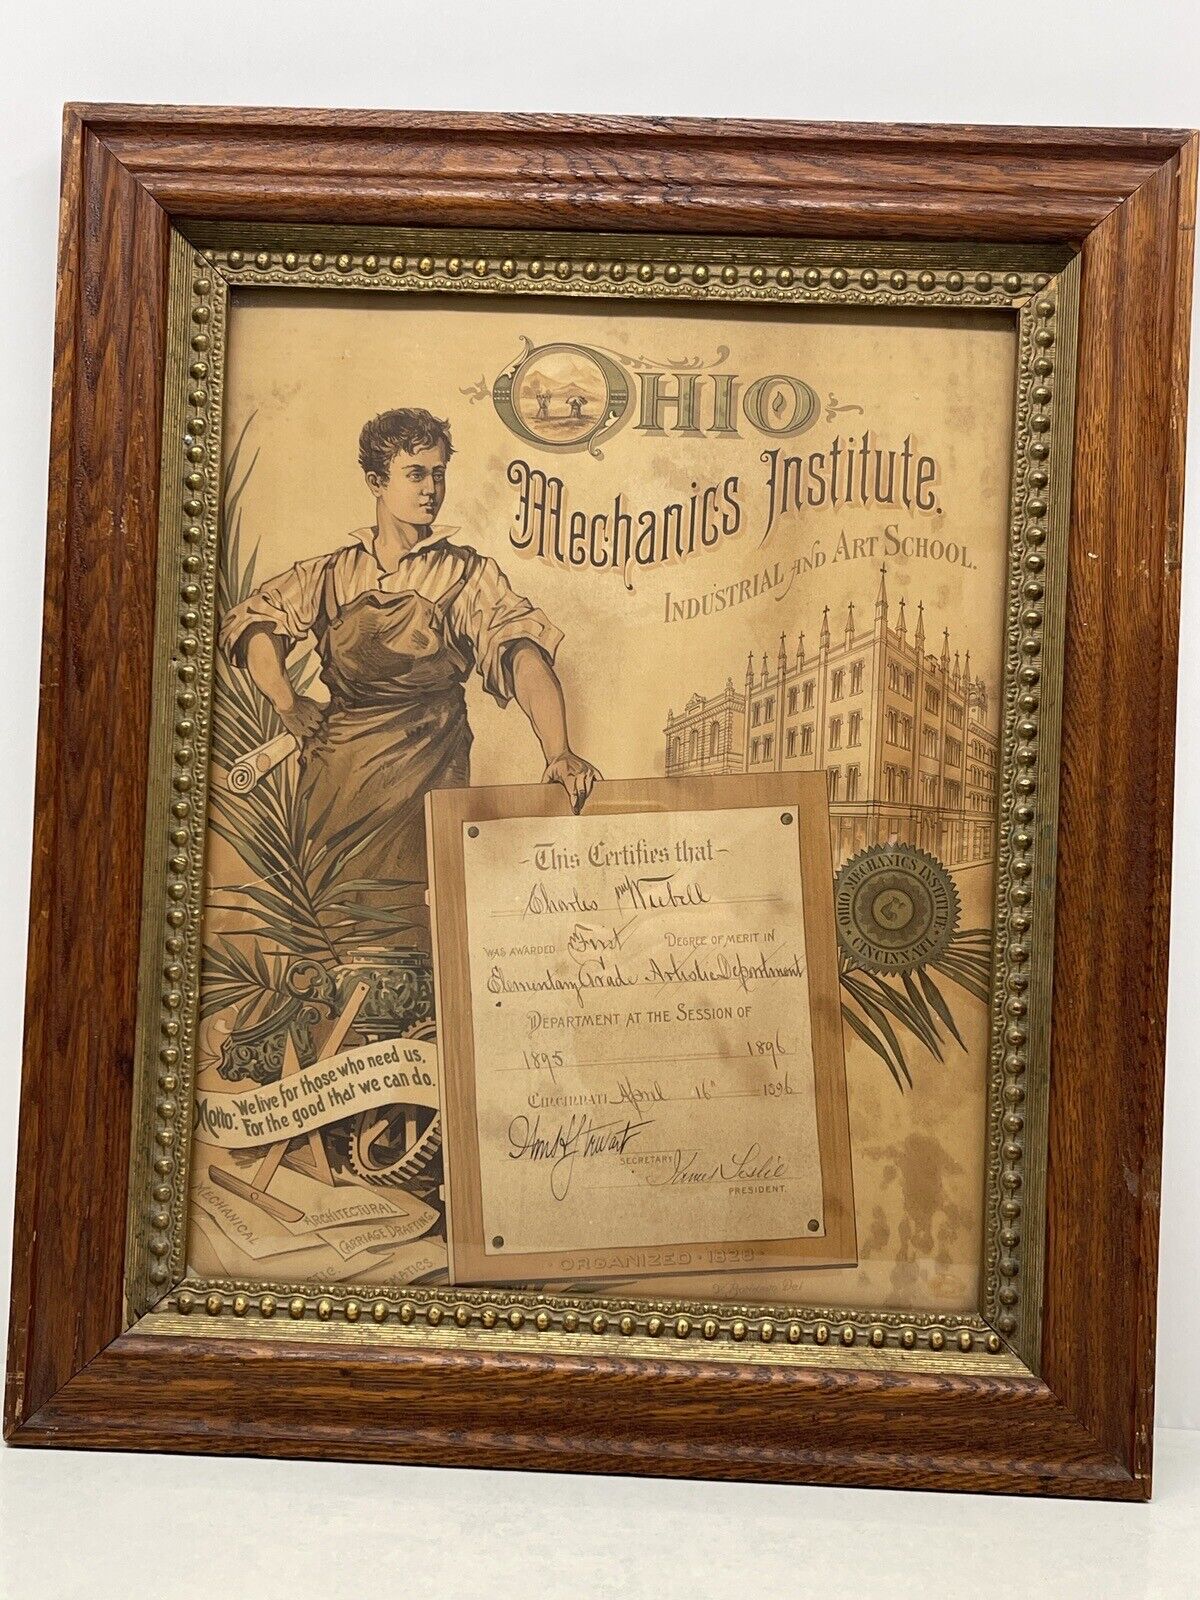 1896 Ohio Mechanics Institute Industrial & Art School Certificate - Cincinnati